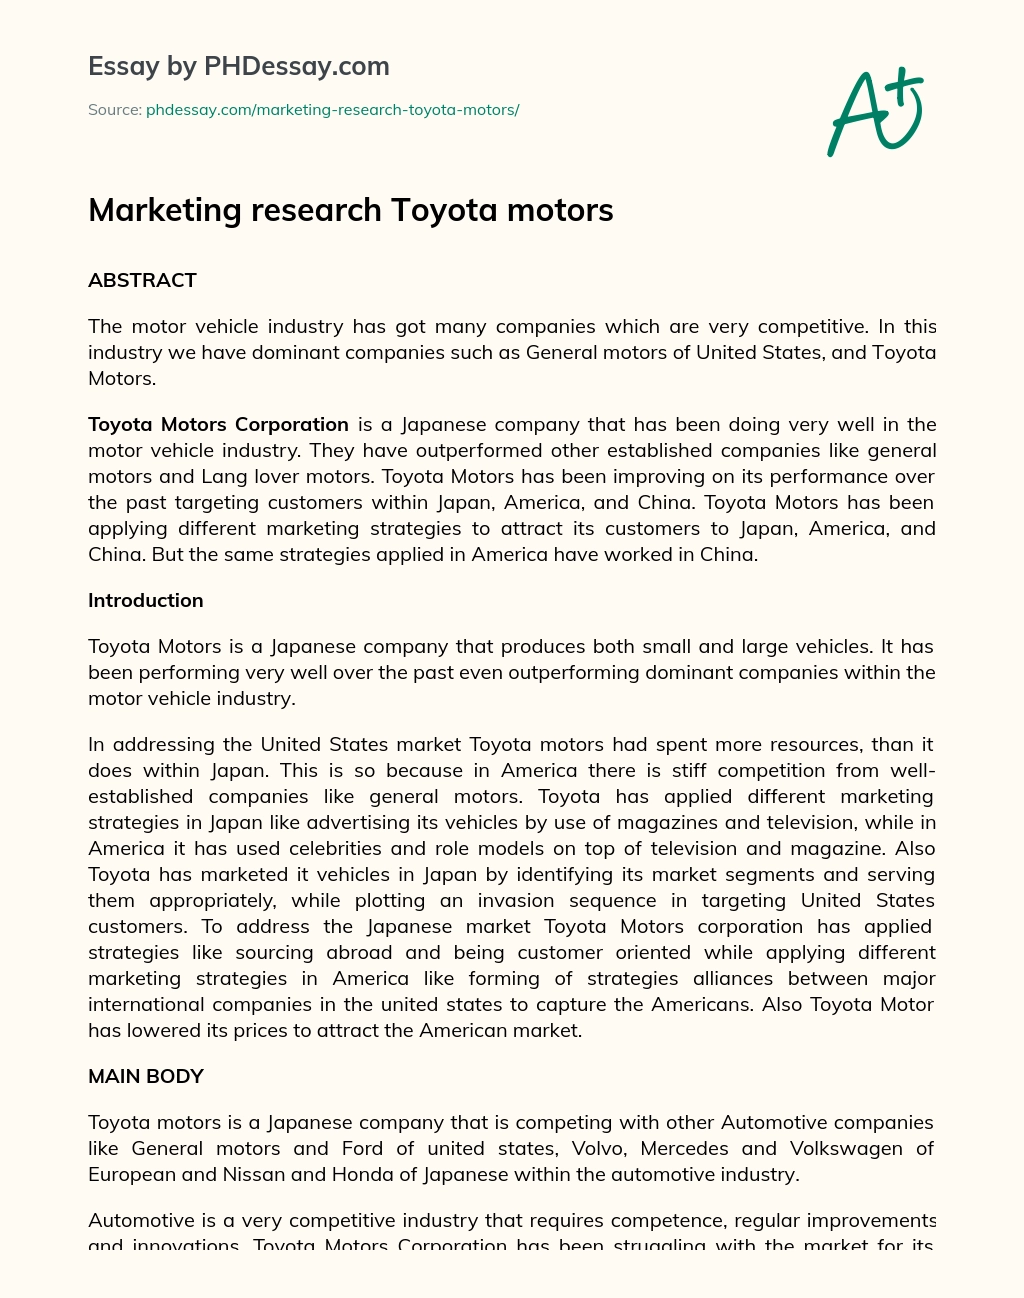 Marketing research Toyota motors essay